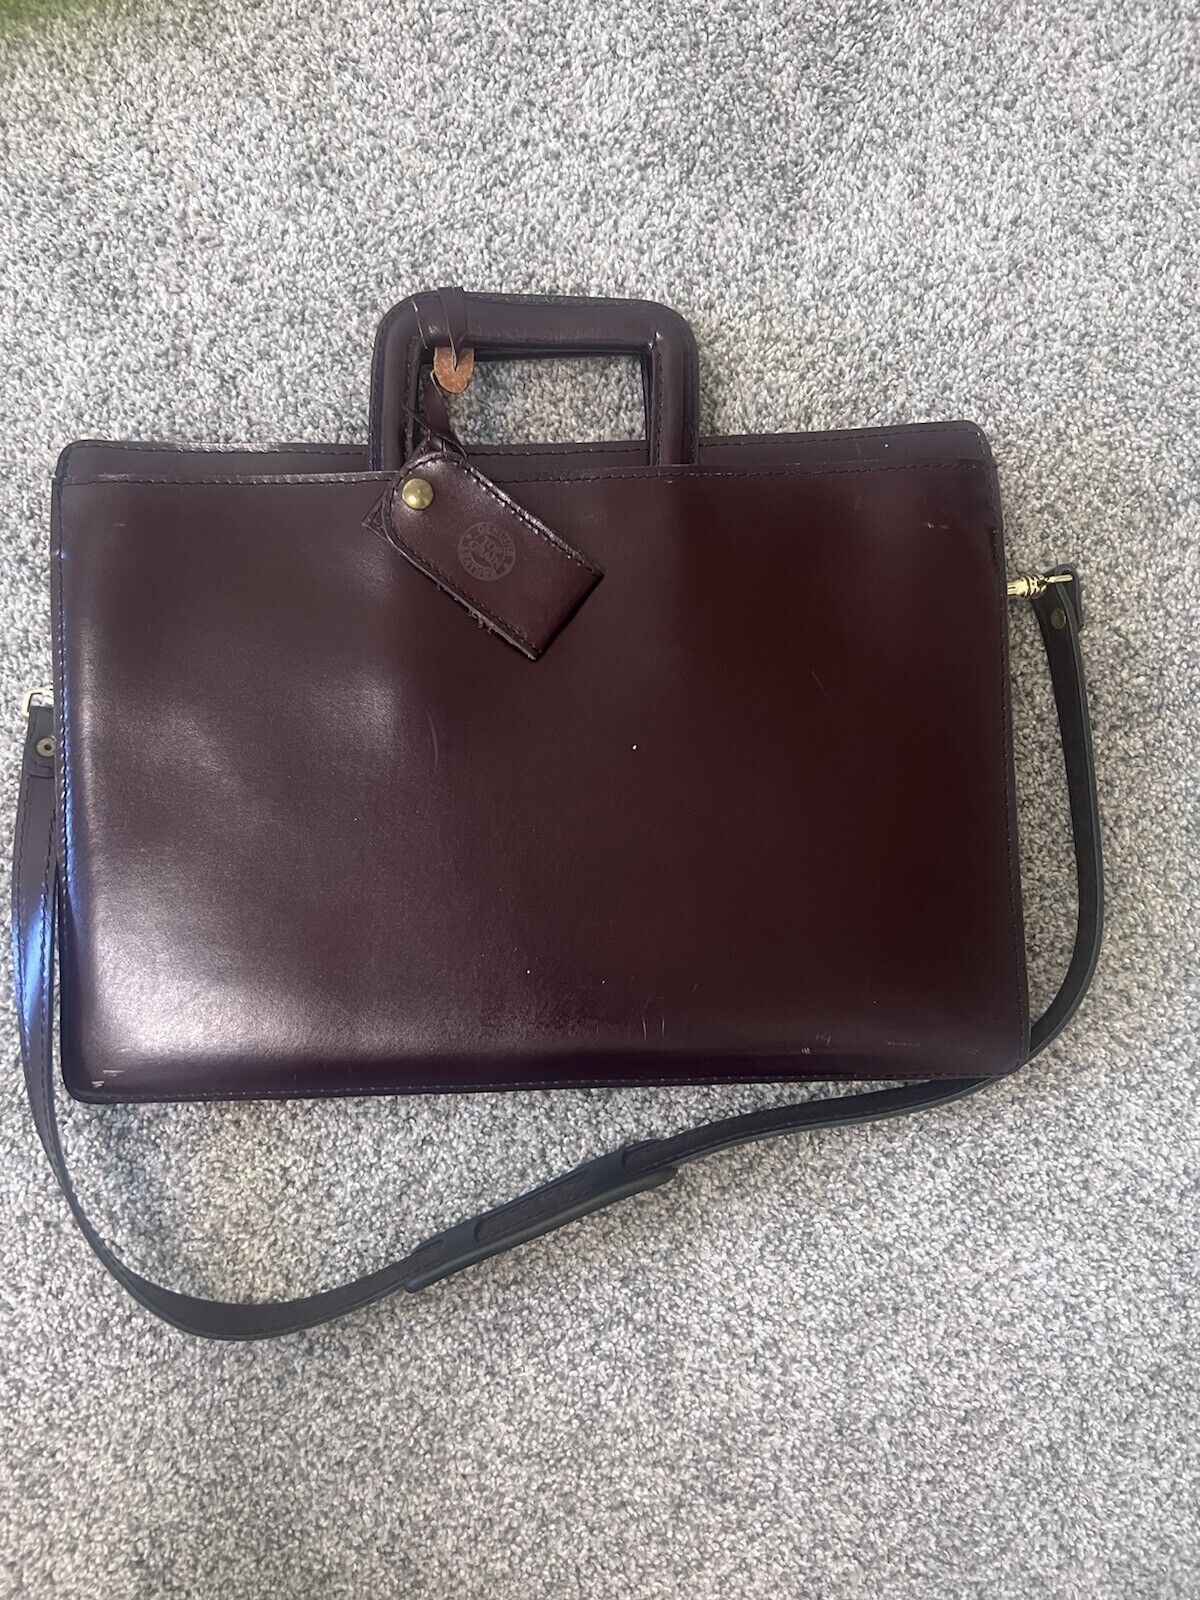 Top Grain Genuine Leather Burgundy Slim Briefcase With Top Handle Shoulder Strap